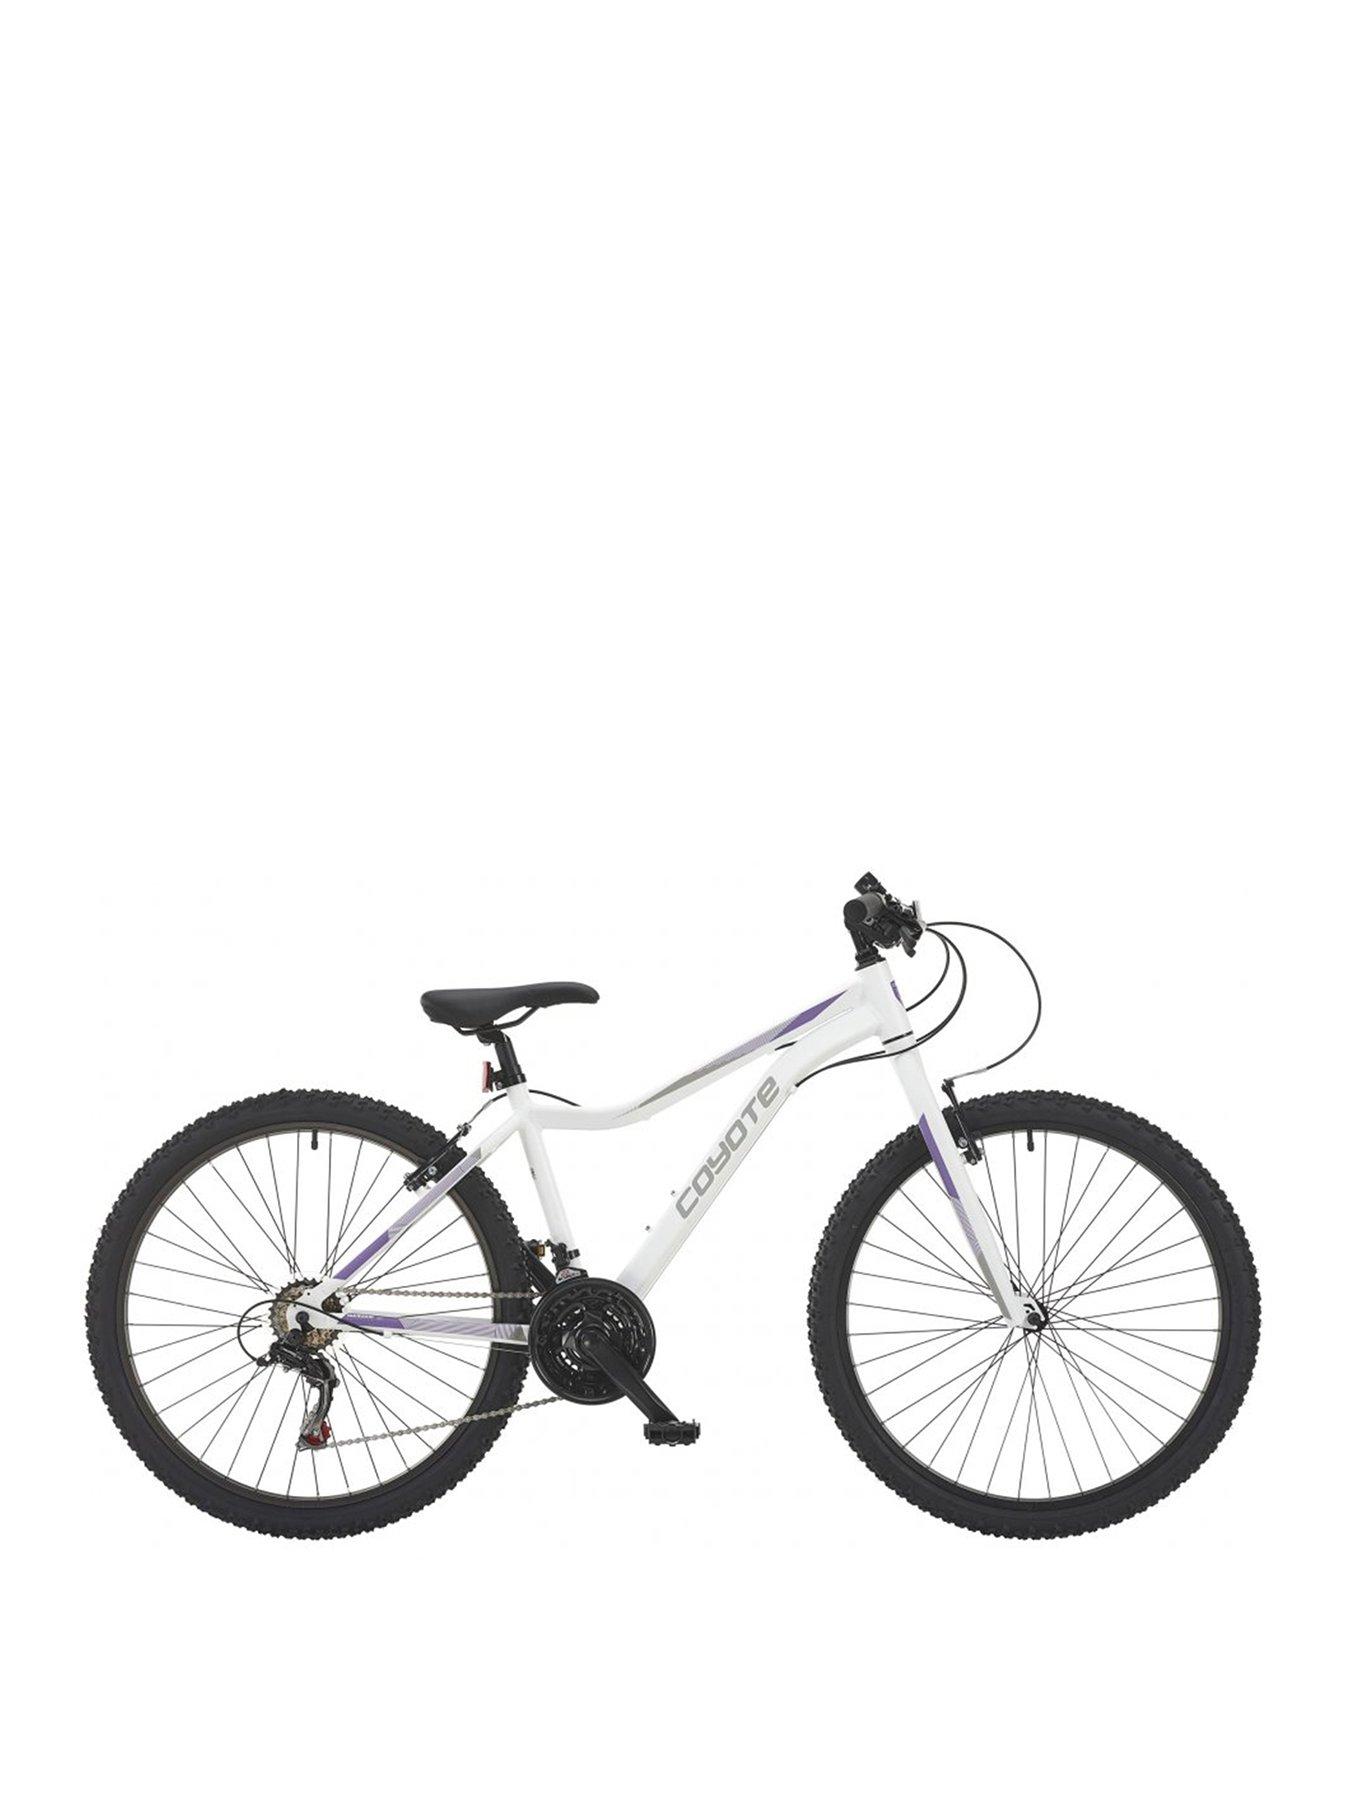 freedom mountain bike - white 26-inch 